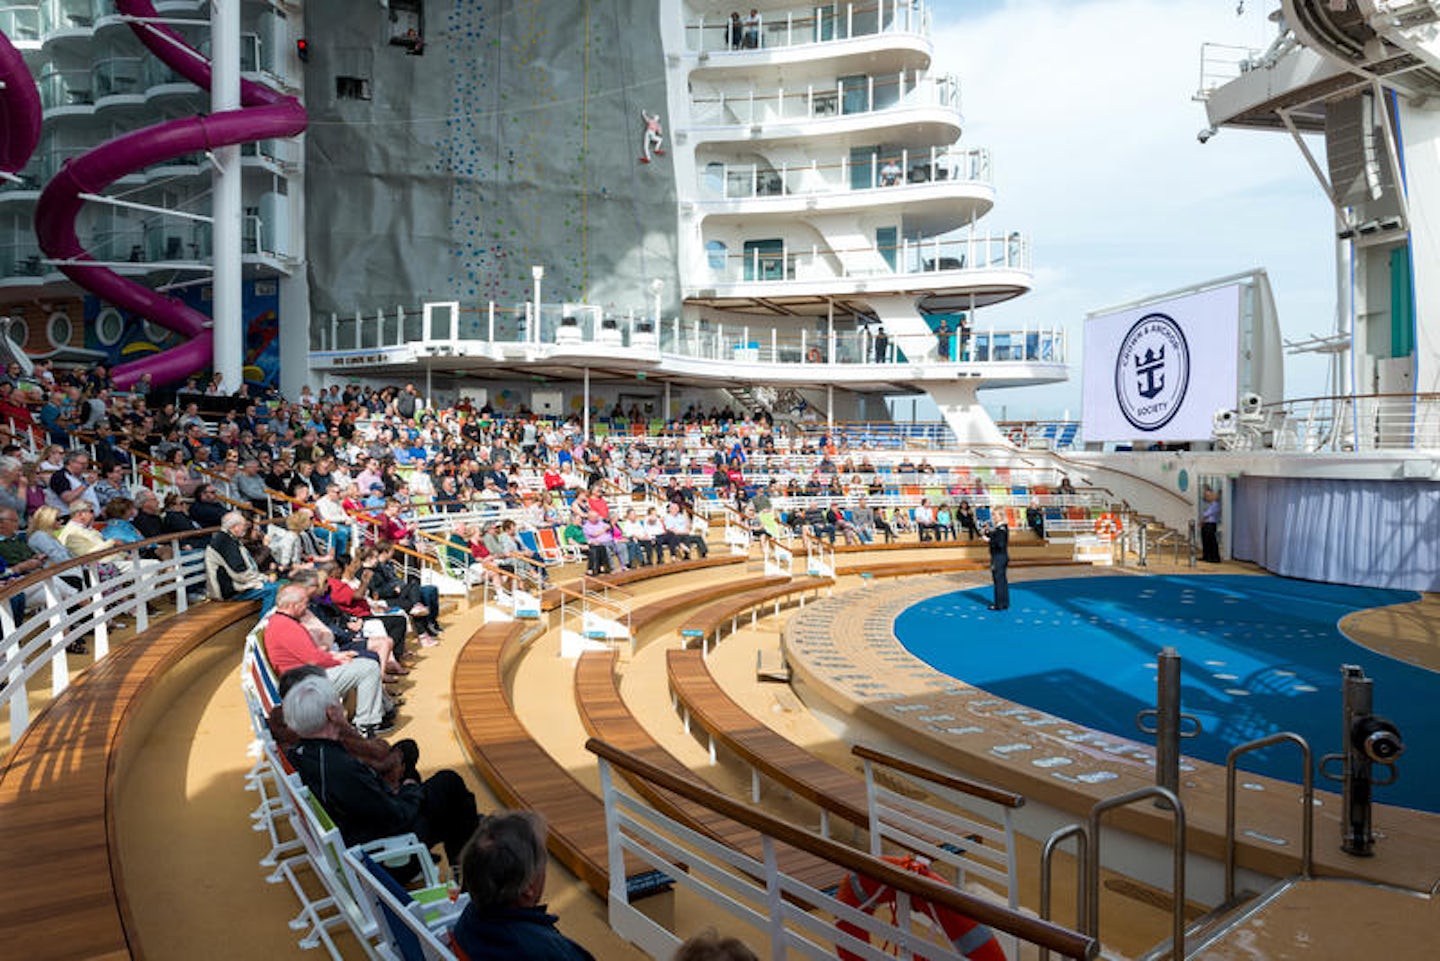 AquaTheater on Symphony of the Seas